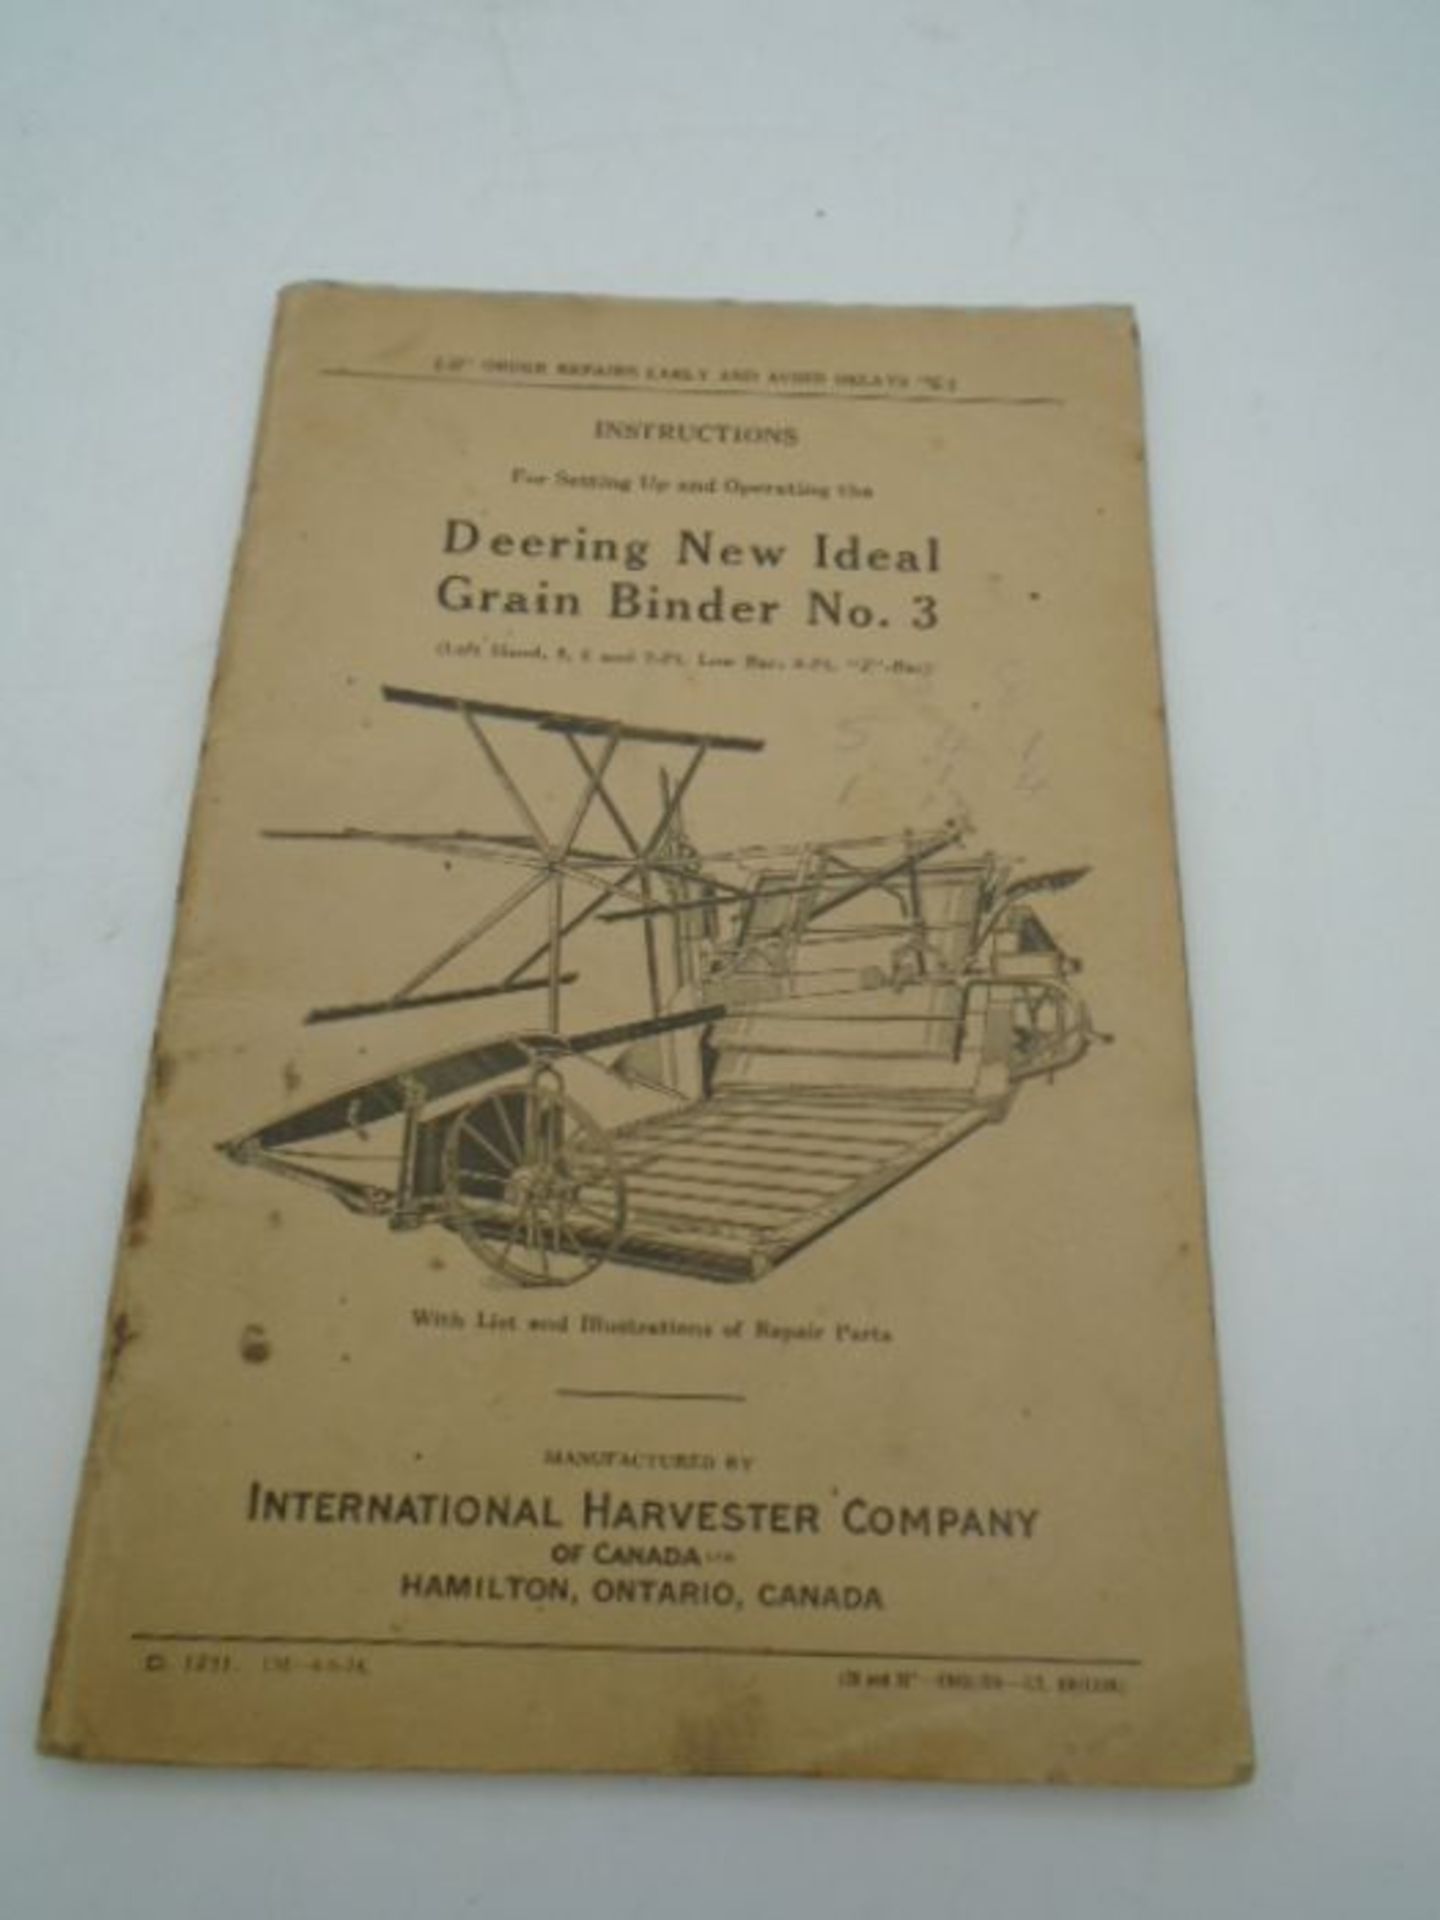 Deering New Ideal grain binder No.3 pamphlet